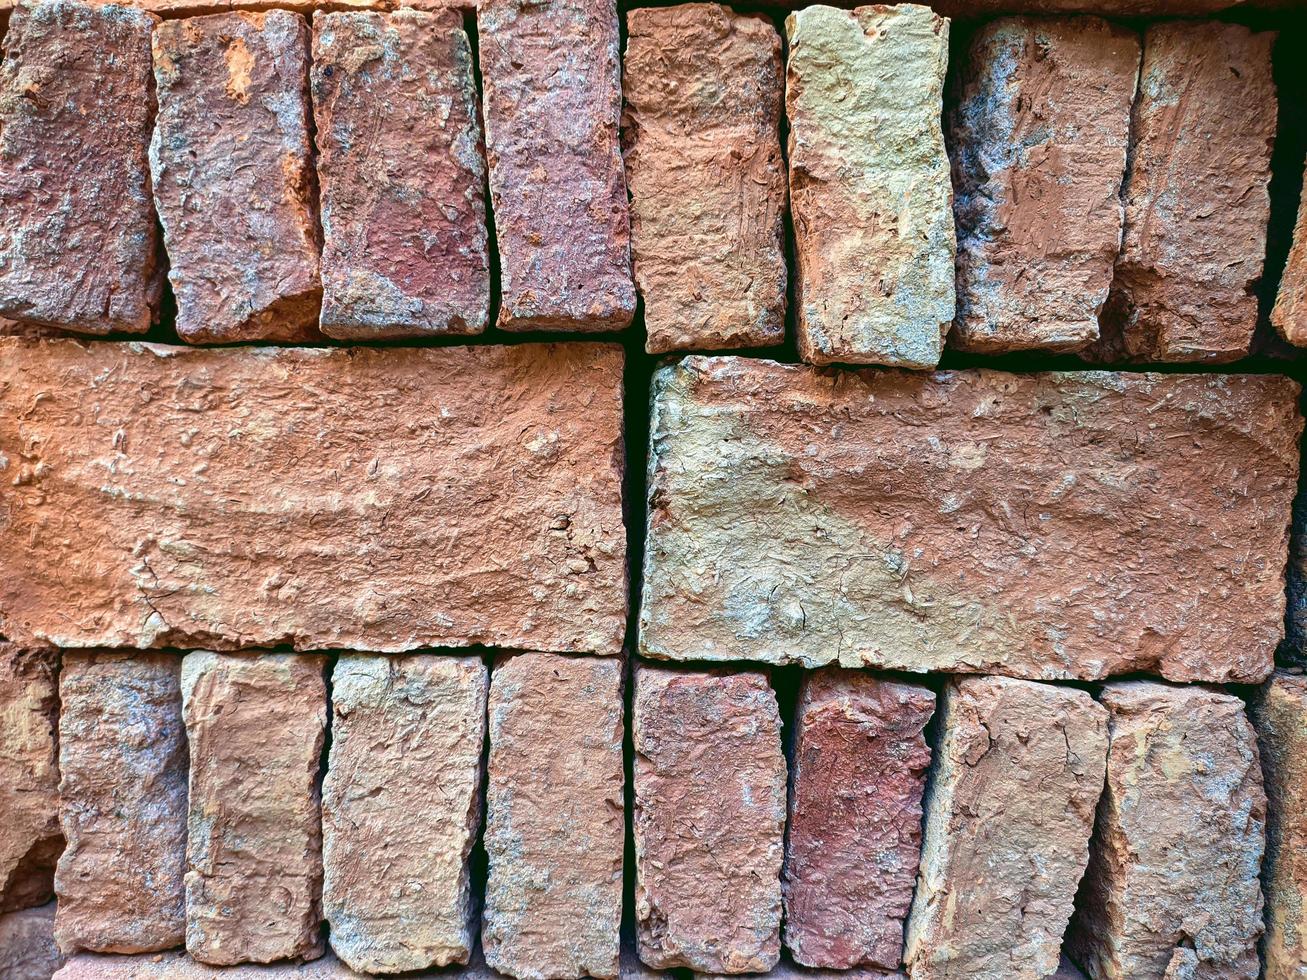 photo of the arrangement of red bricks